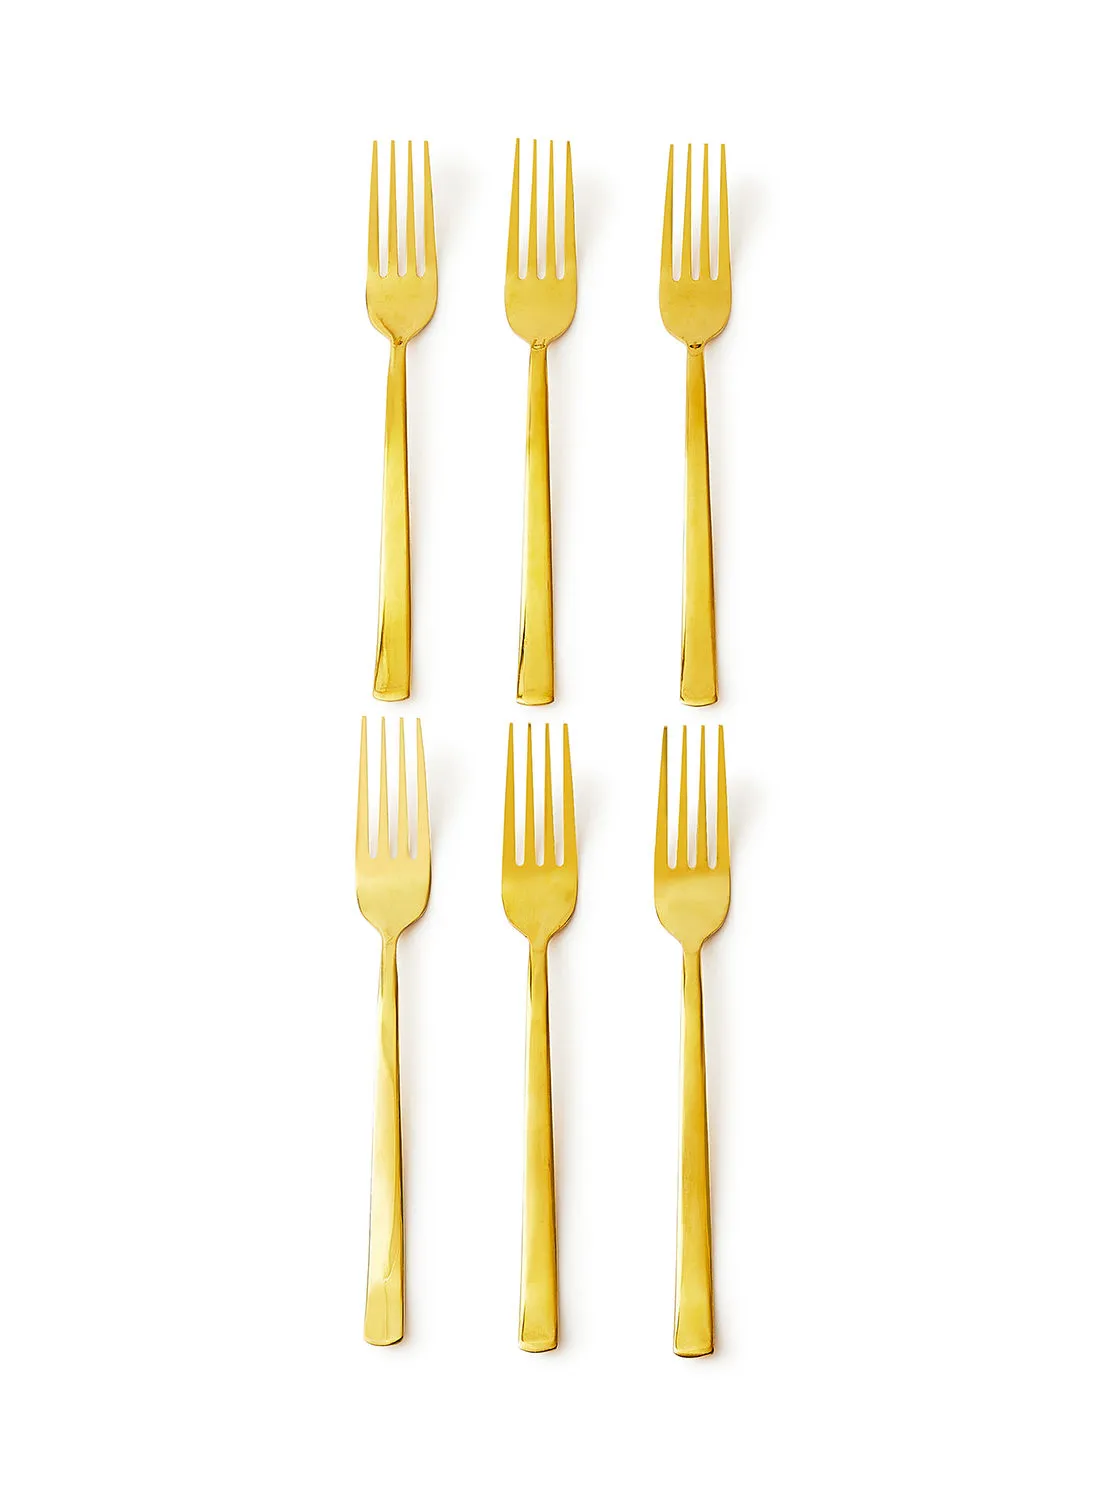 noon east 6 Piece Forks Set - Made Of Stainless Steel - Silverware Flatware - Fork Set - Serves 6 - Design Gold Spade